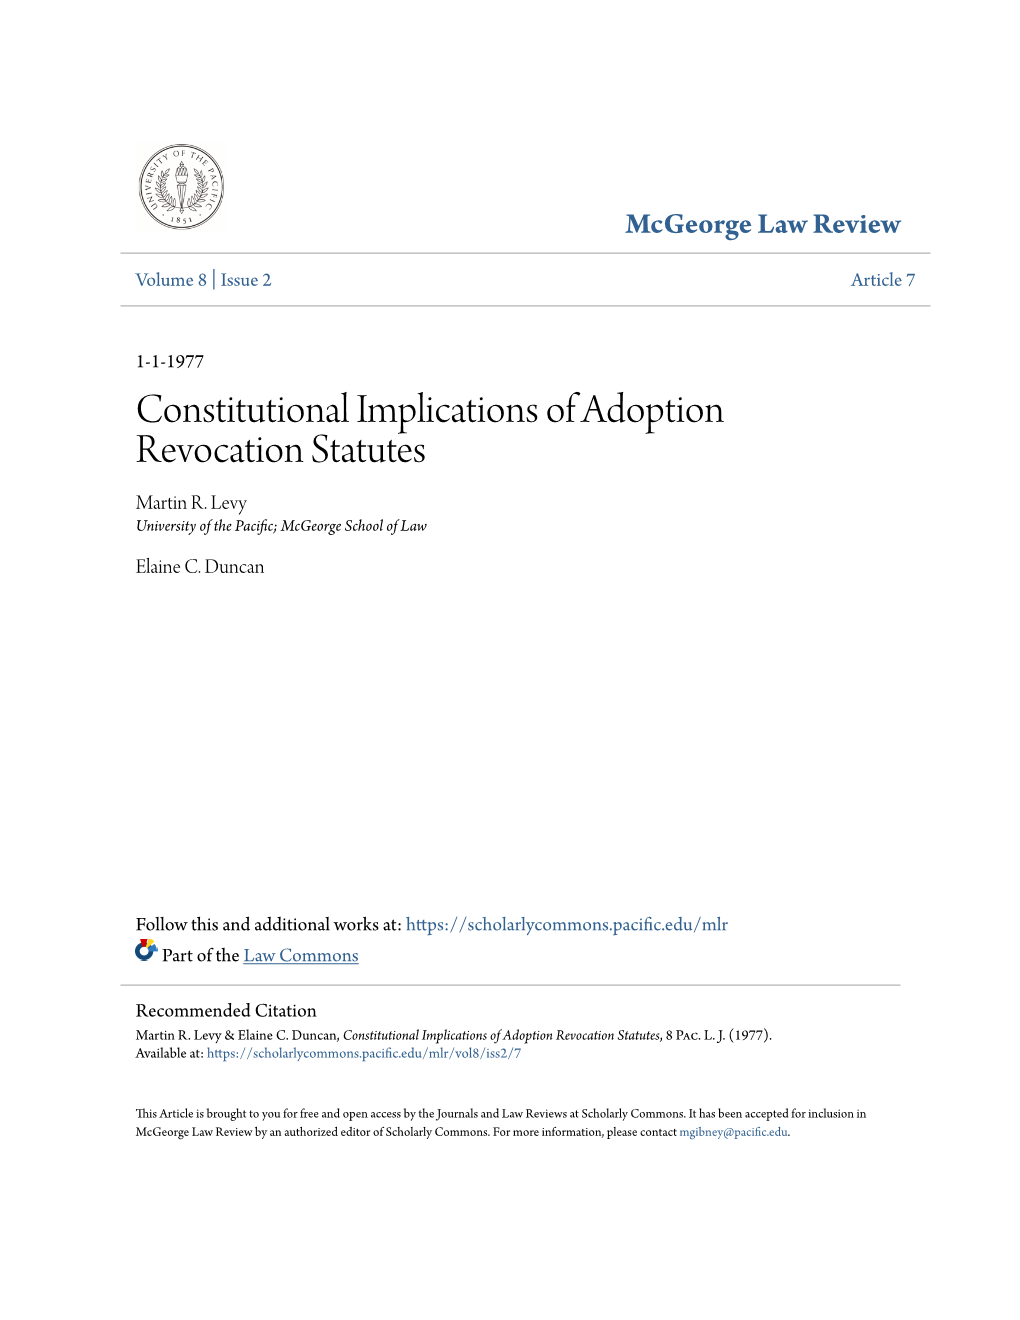 Constitutional Implications of Adoption Revocation Statutes Martin R